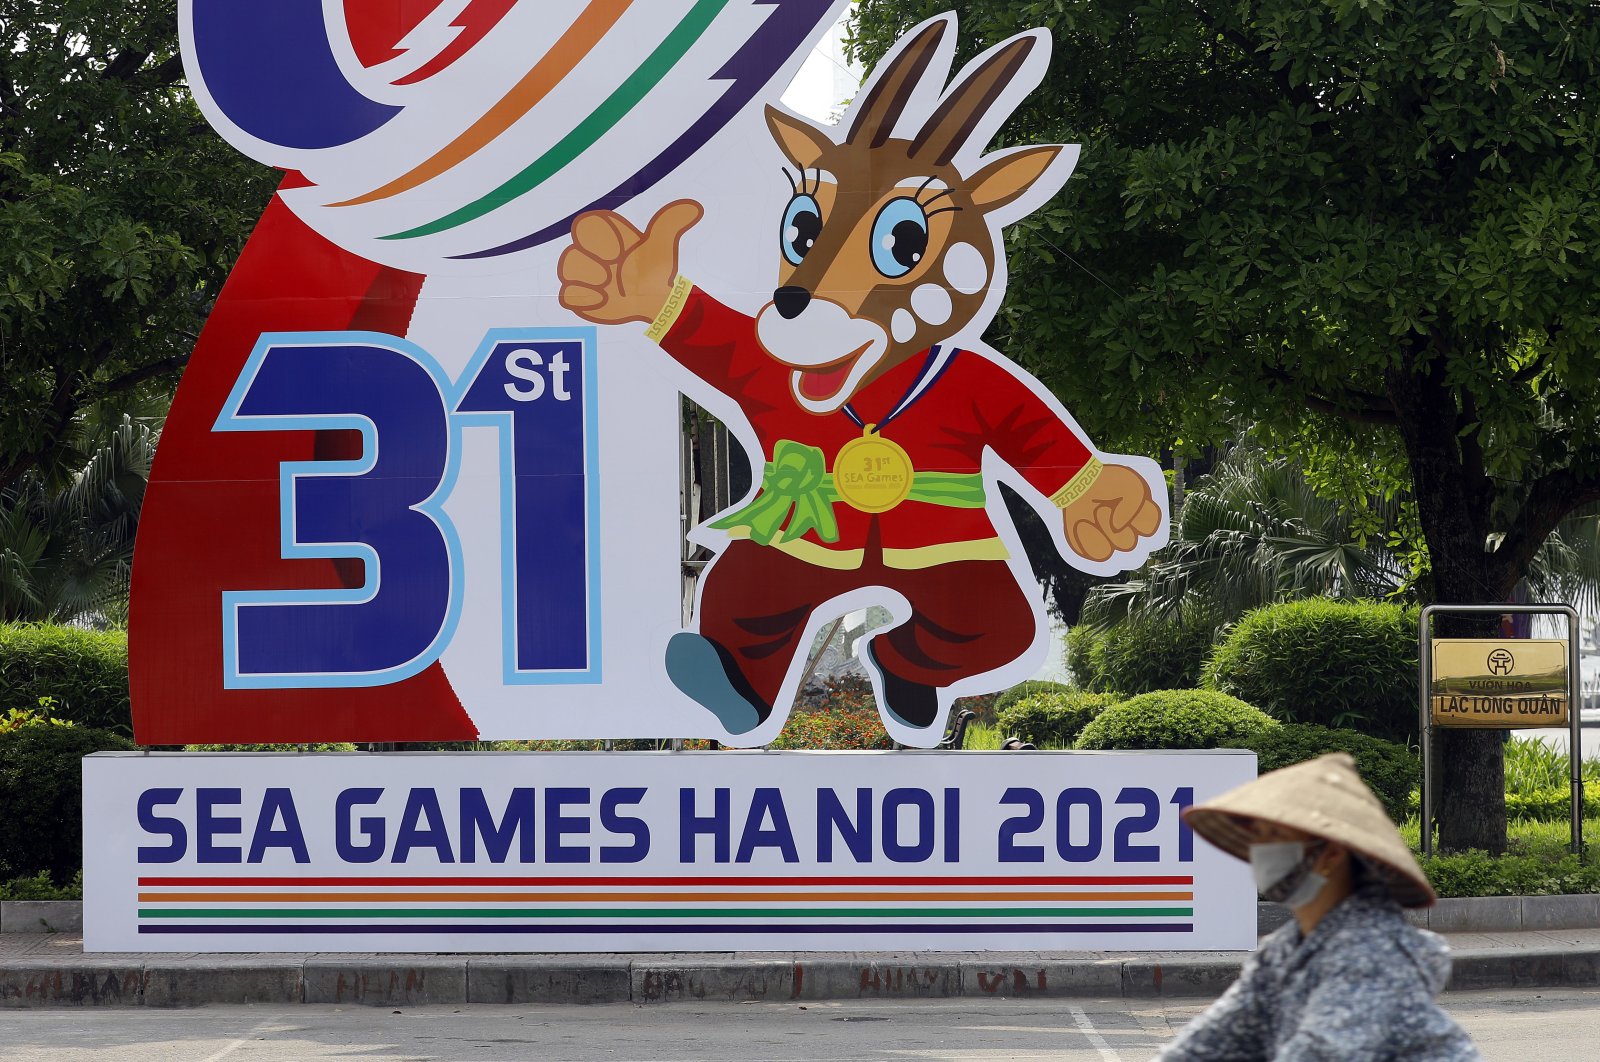 Hanoi siap menjadi tuan rumah Asian Games Tenggara setelah penundaan COVID-19